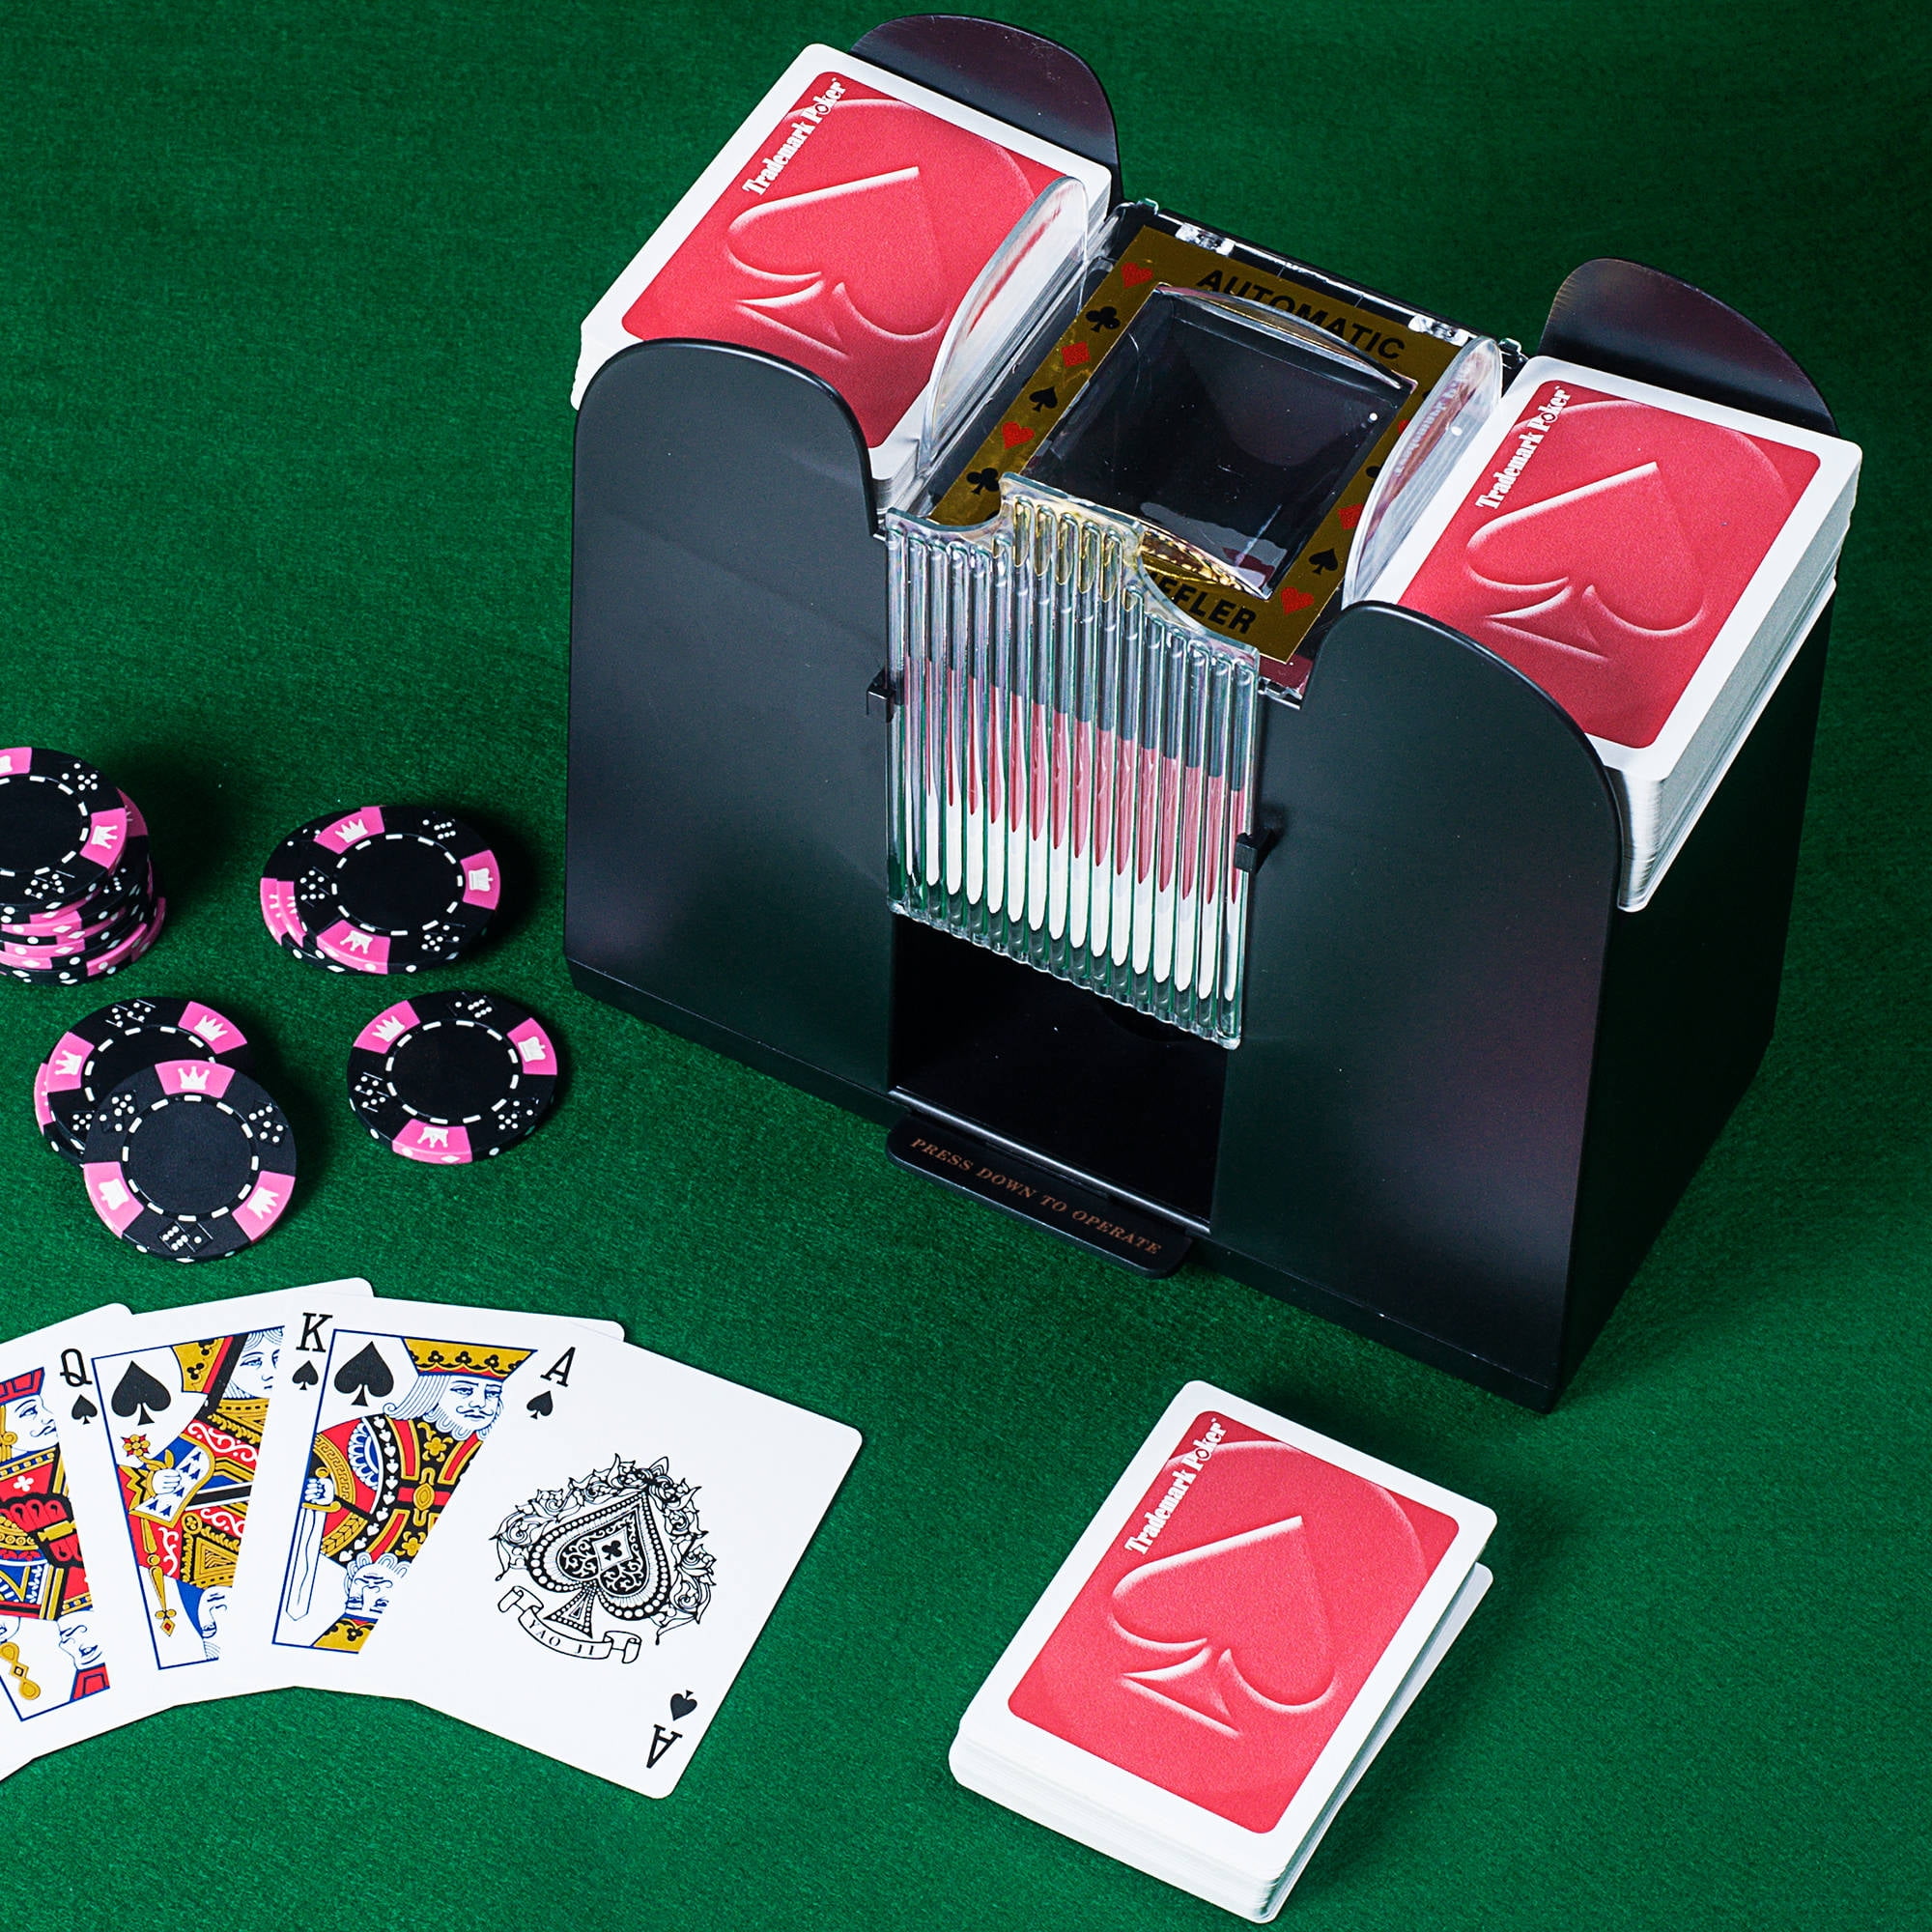 AMAMIA 2-Deck Card Shuffler 2 Decks Golden Foil Waterproof Playing Cards,for Home Card Games,Blackjack,Poker,Rummy Automatic Poker Card Shuffler 